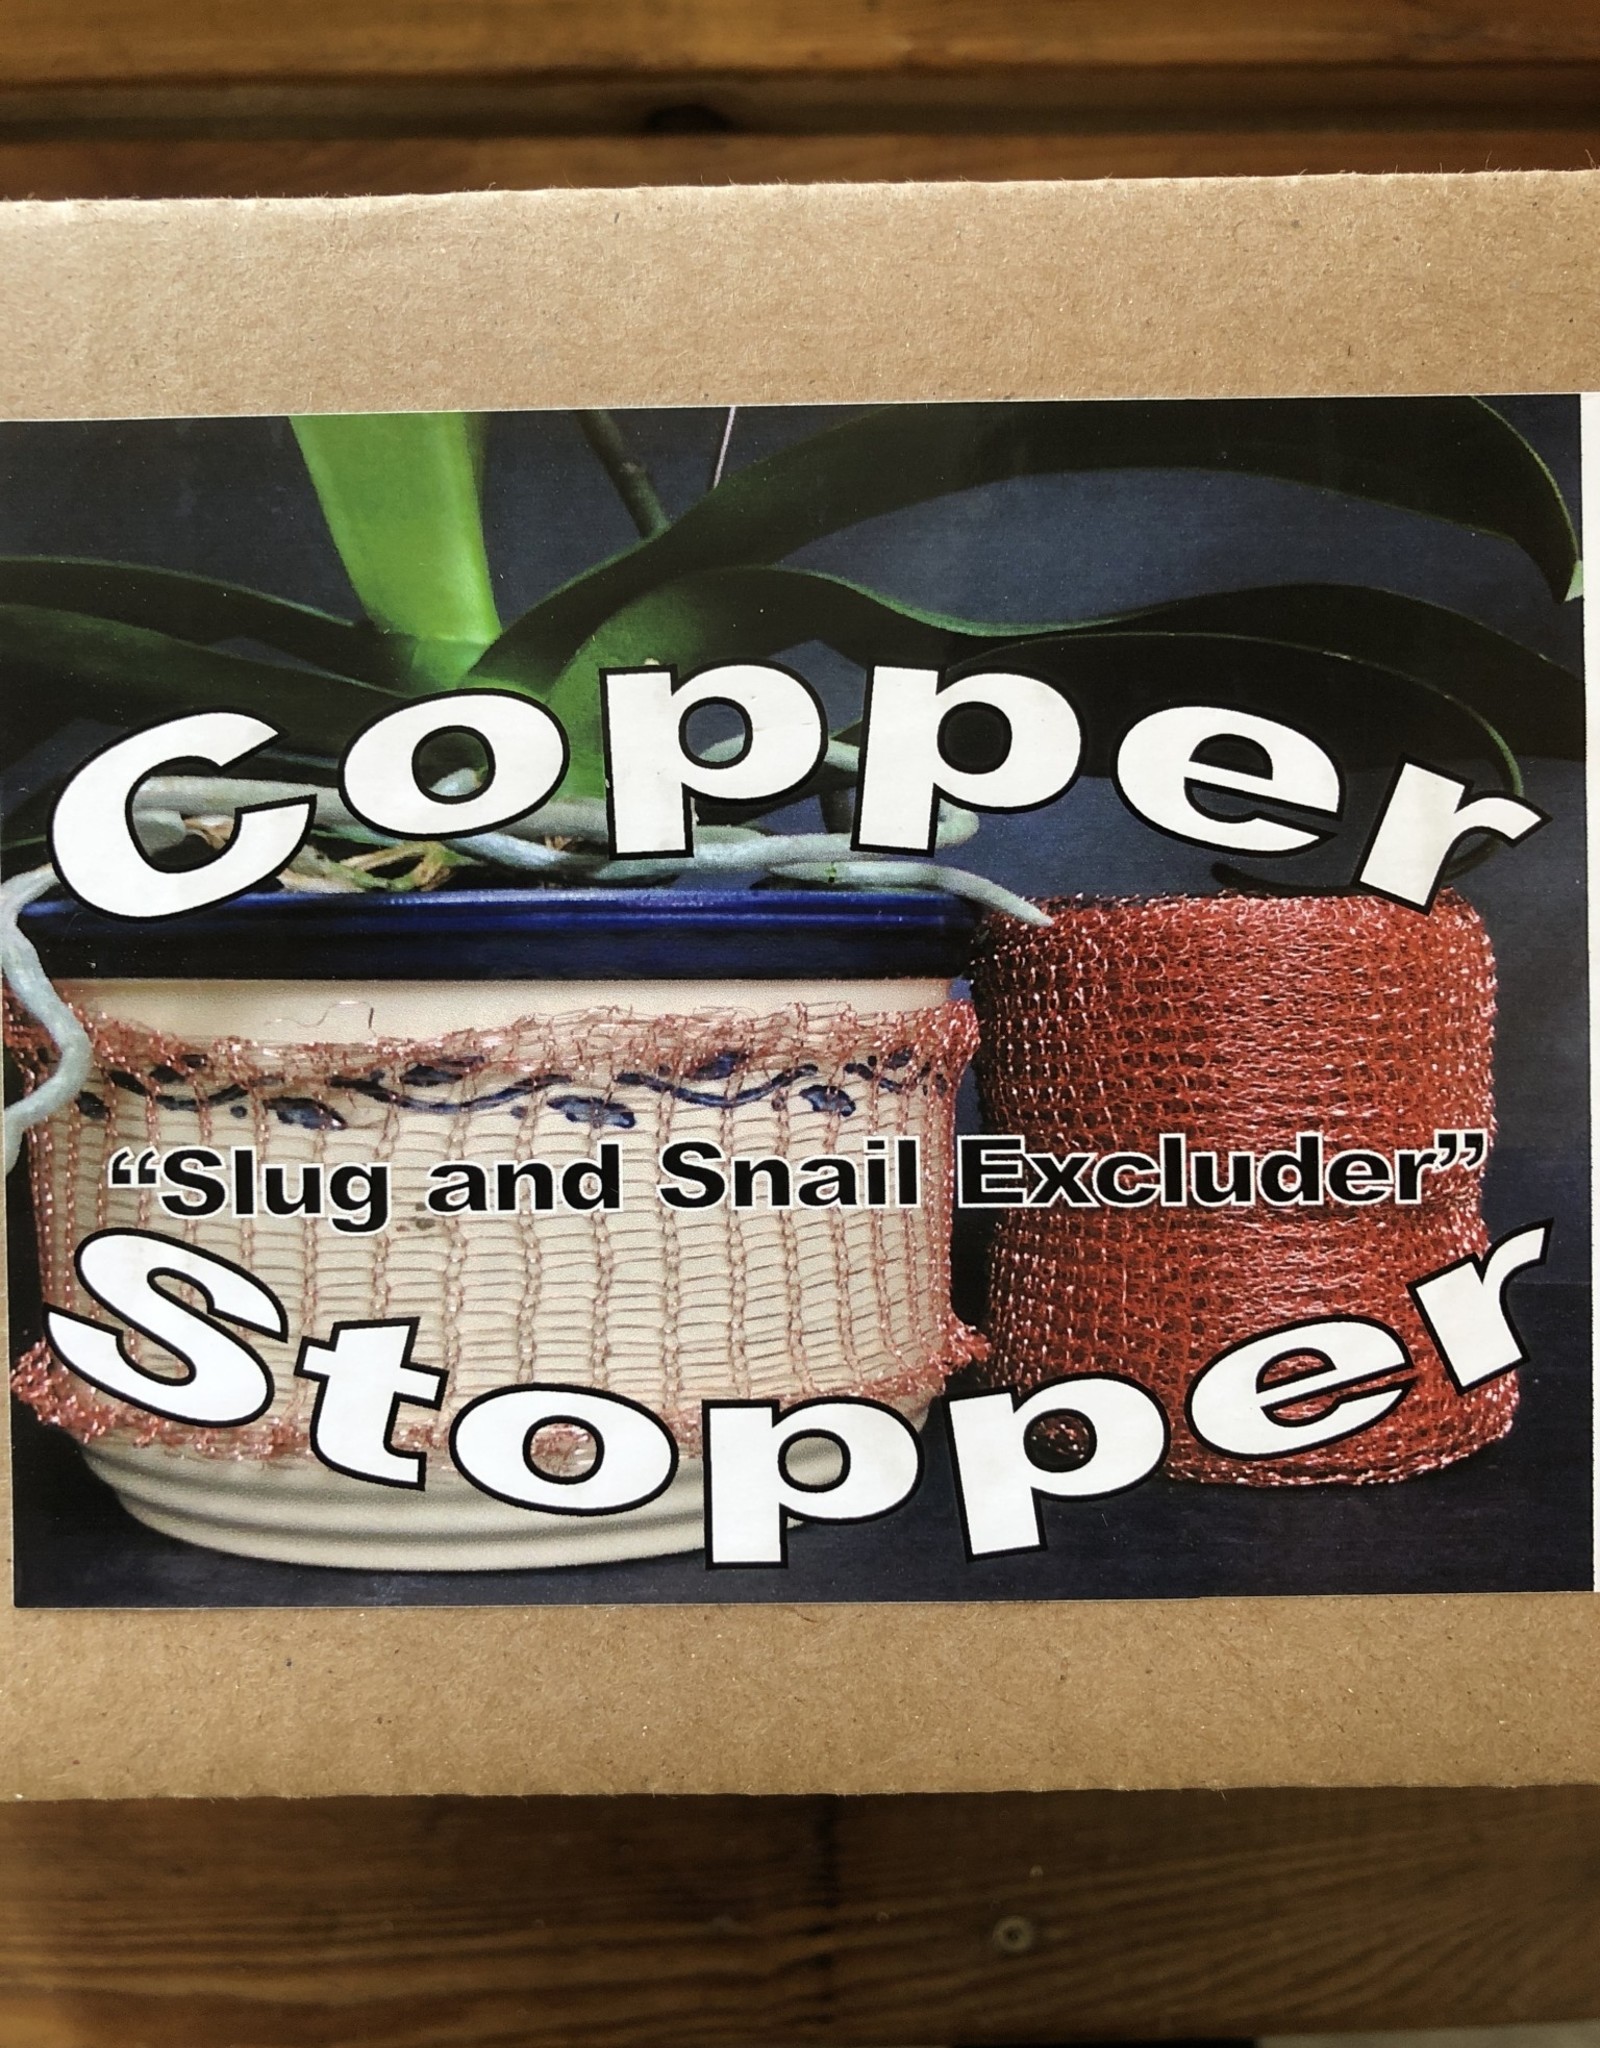 Copper Stopper - Slug Snail Tape - 5 inch x 100 feet